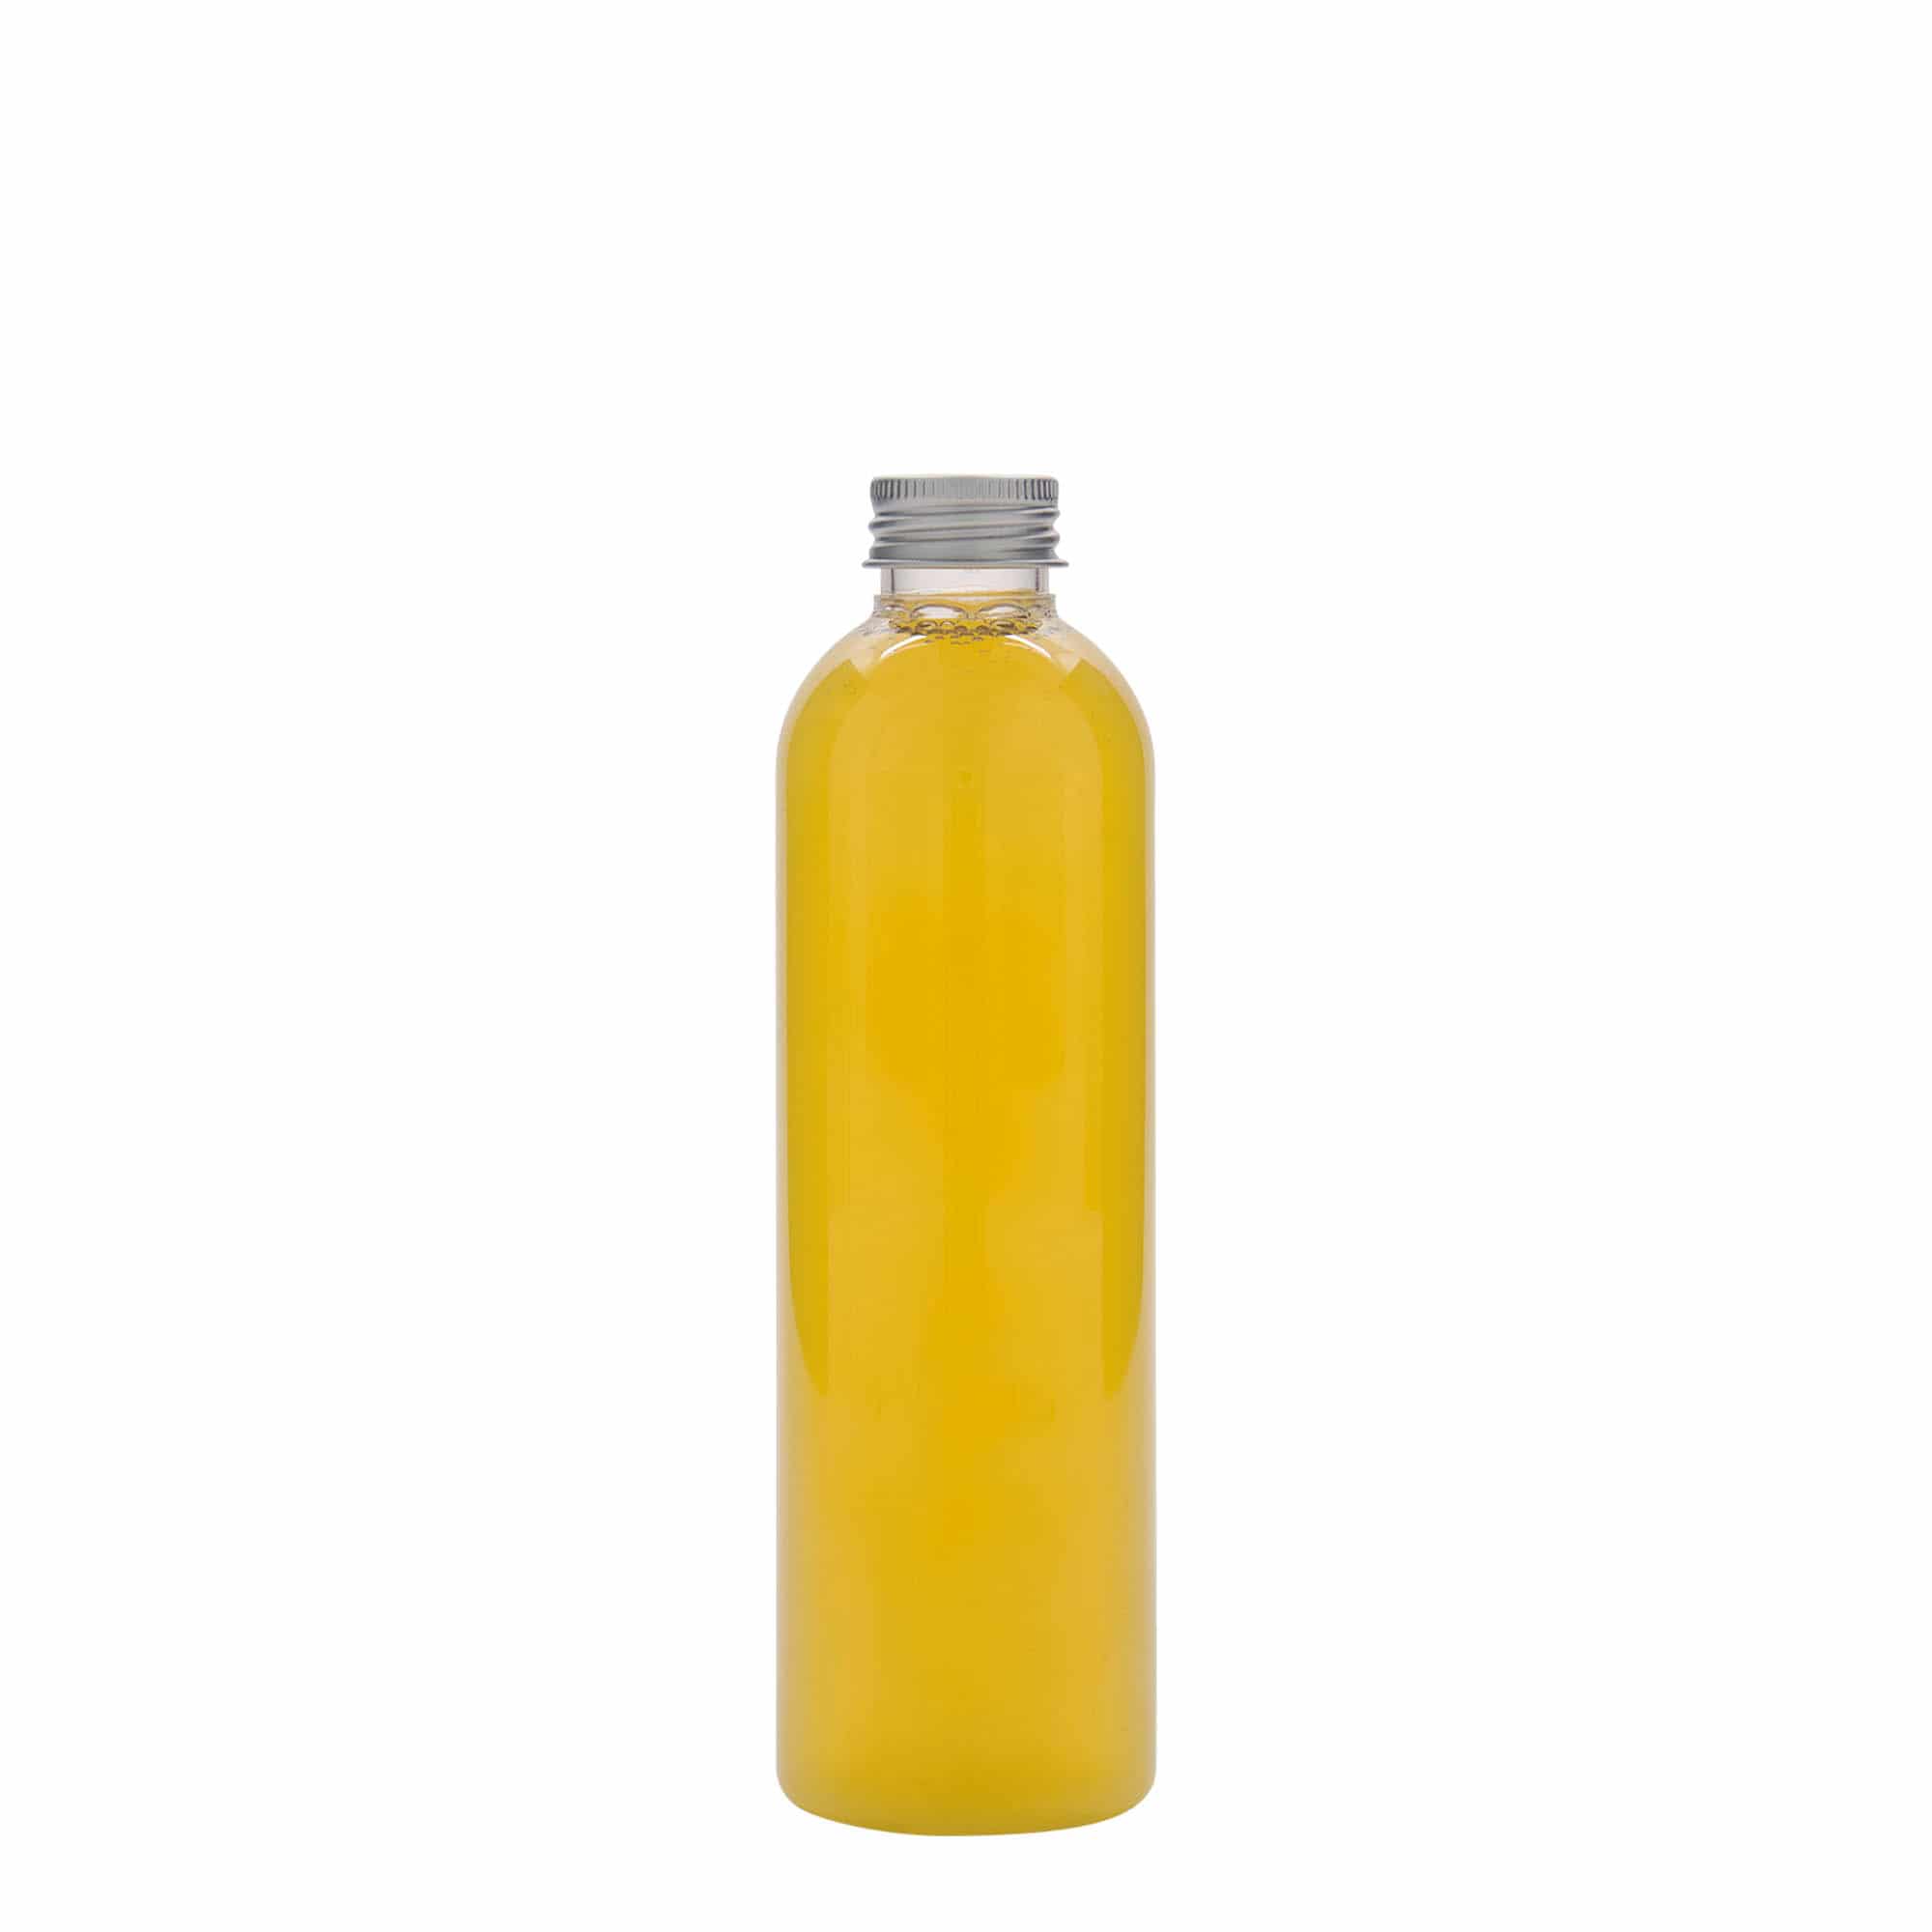 Botella de PET 'Pegasus' de 250 ml, plástico, boca: GPI 20/410